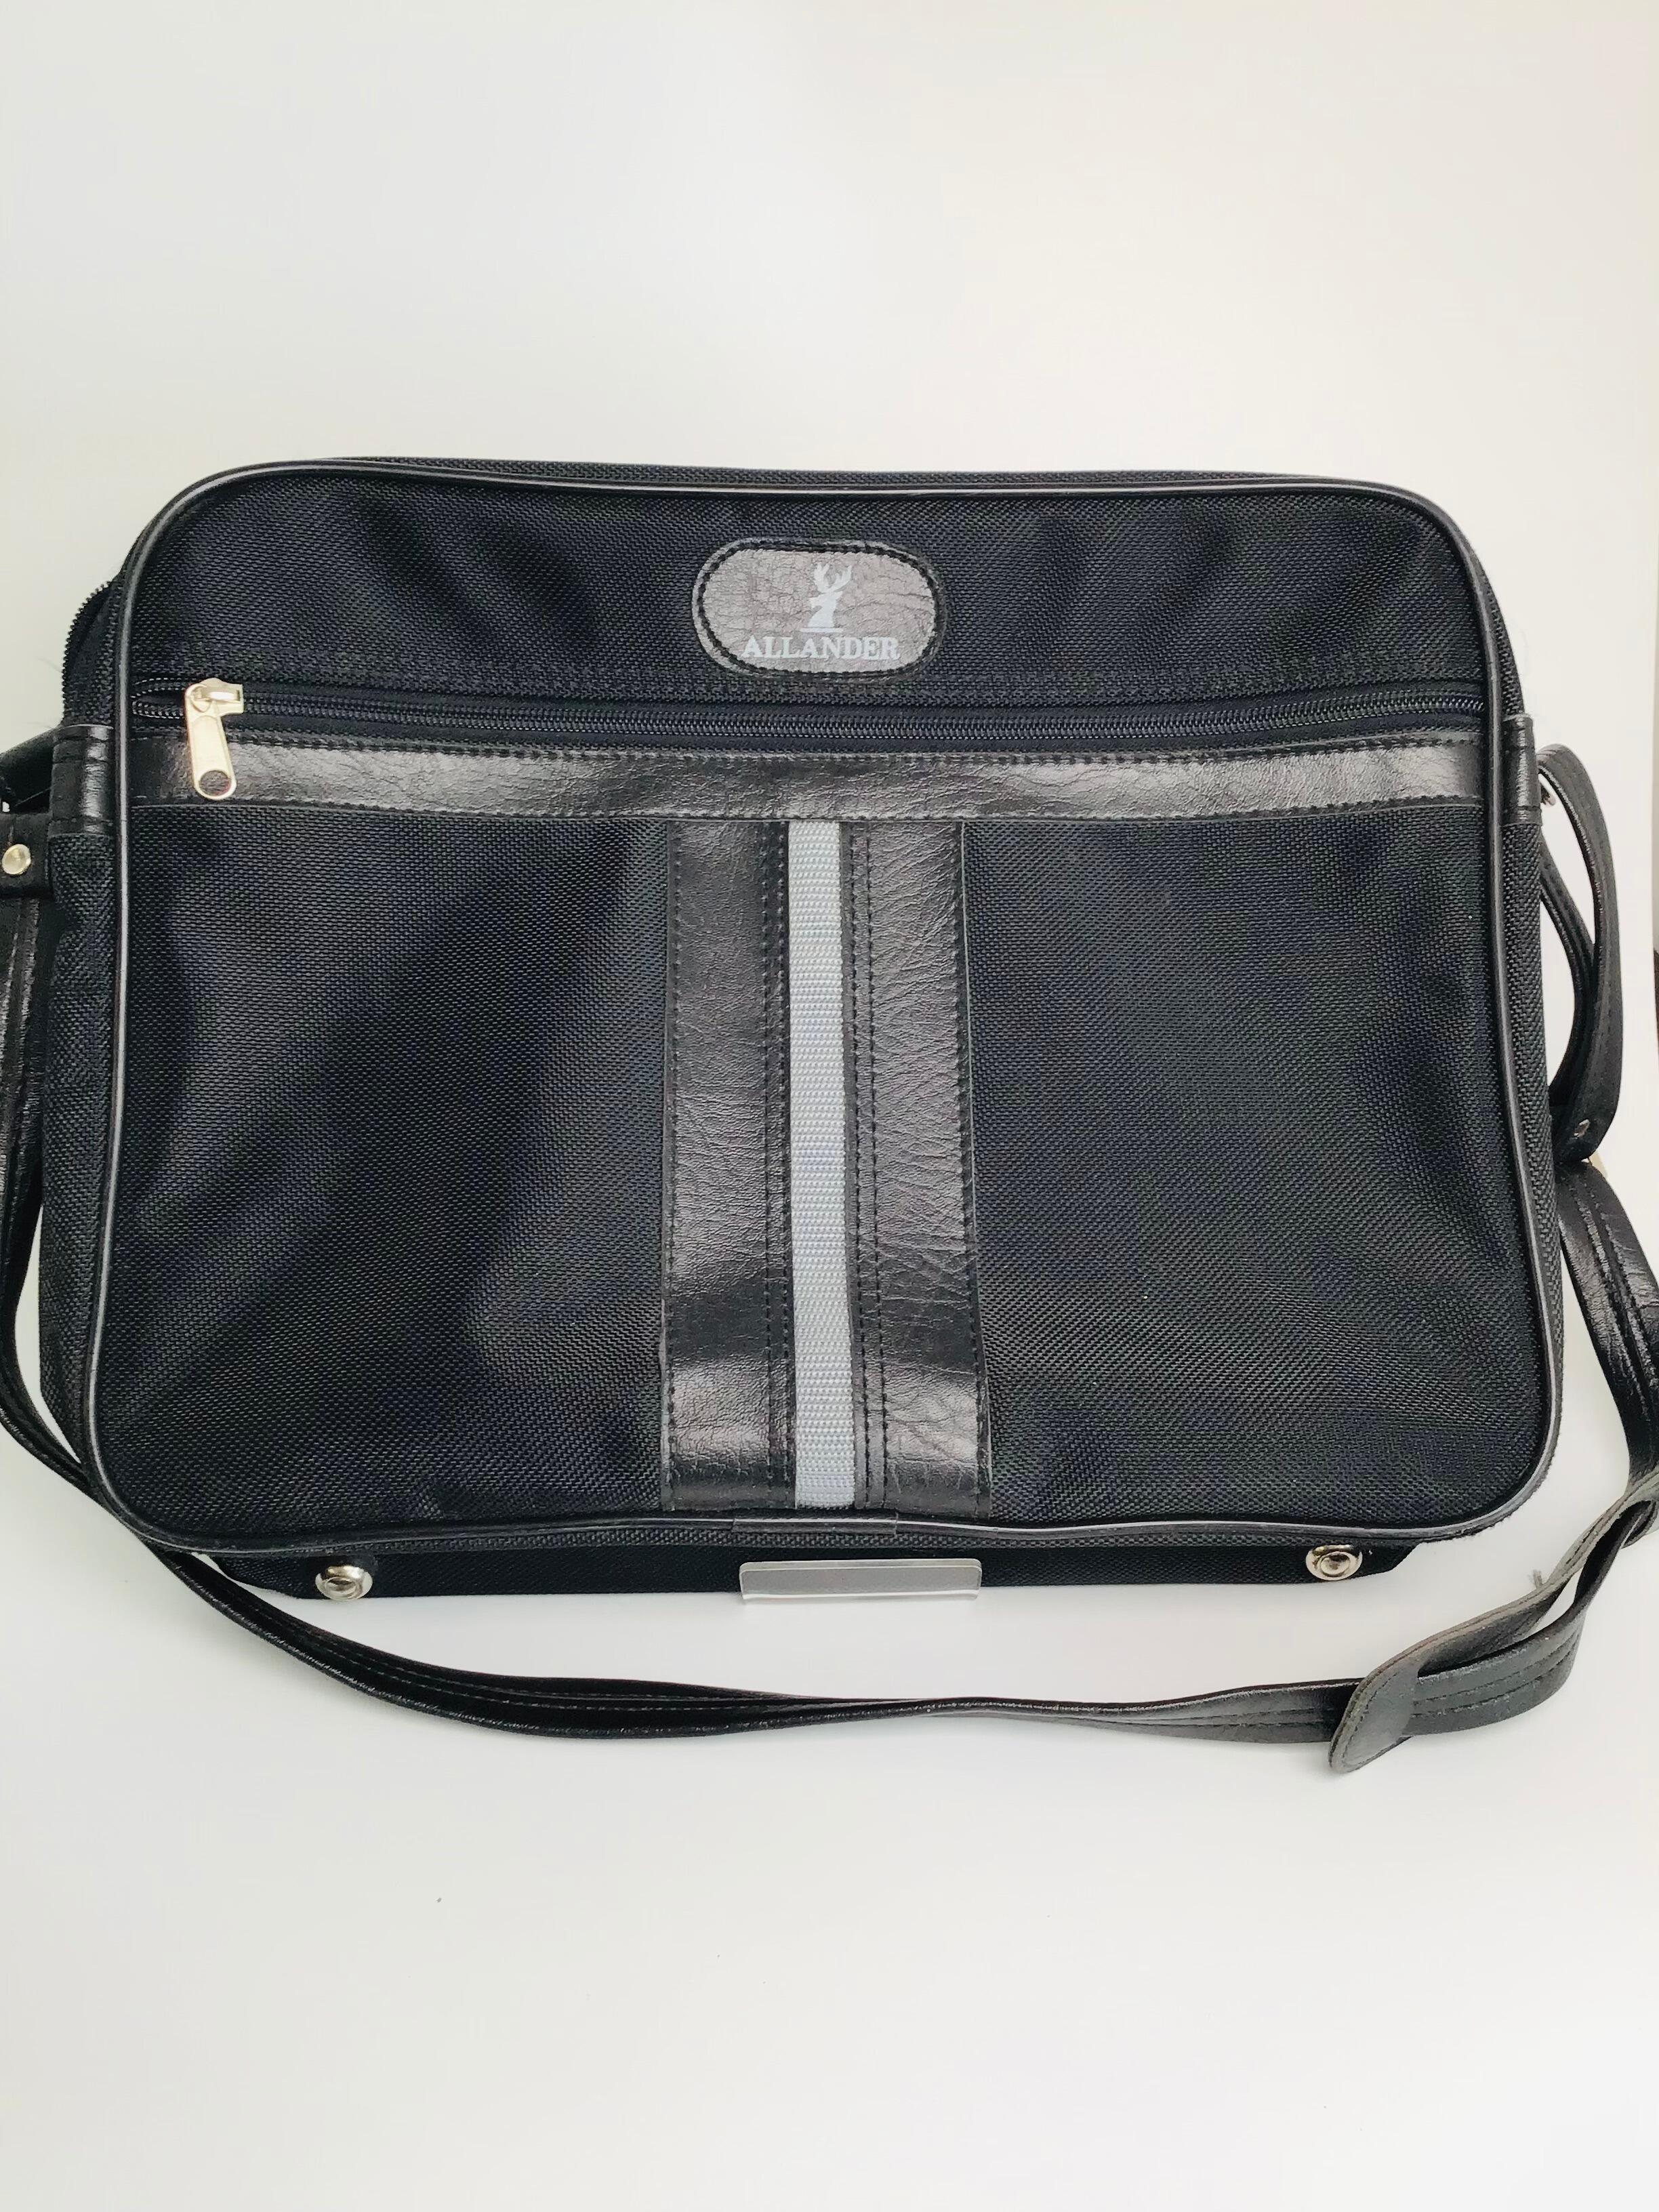 COLLECTION DEBENHAMS SMALL straw shoulder bag/ crossbody bag £3.00 -  PicClick UK